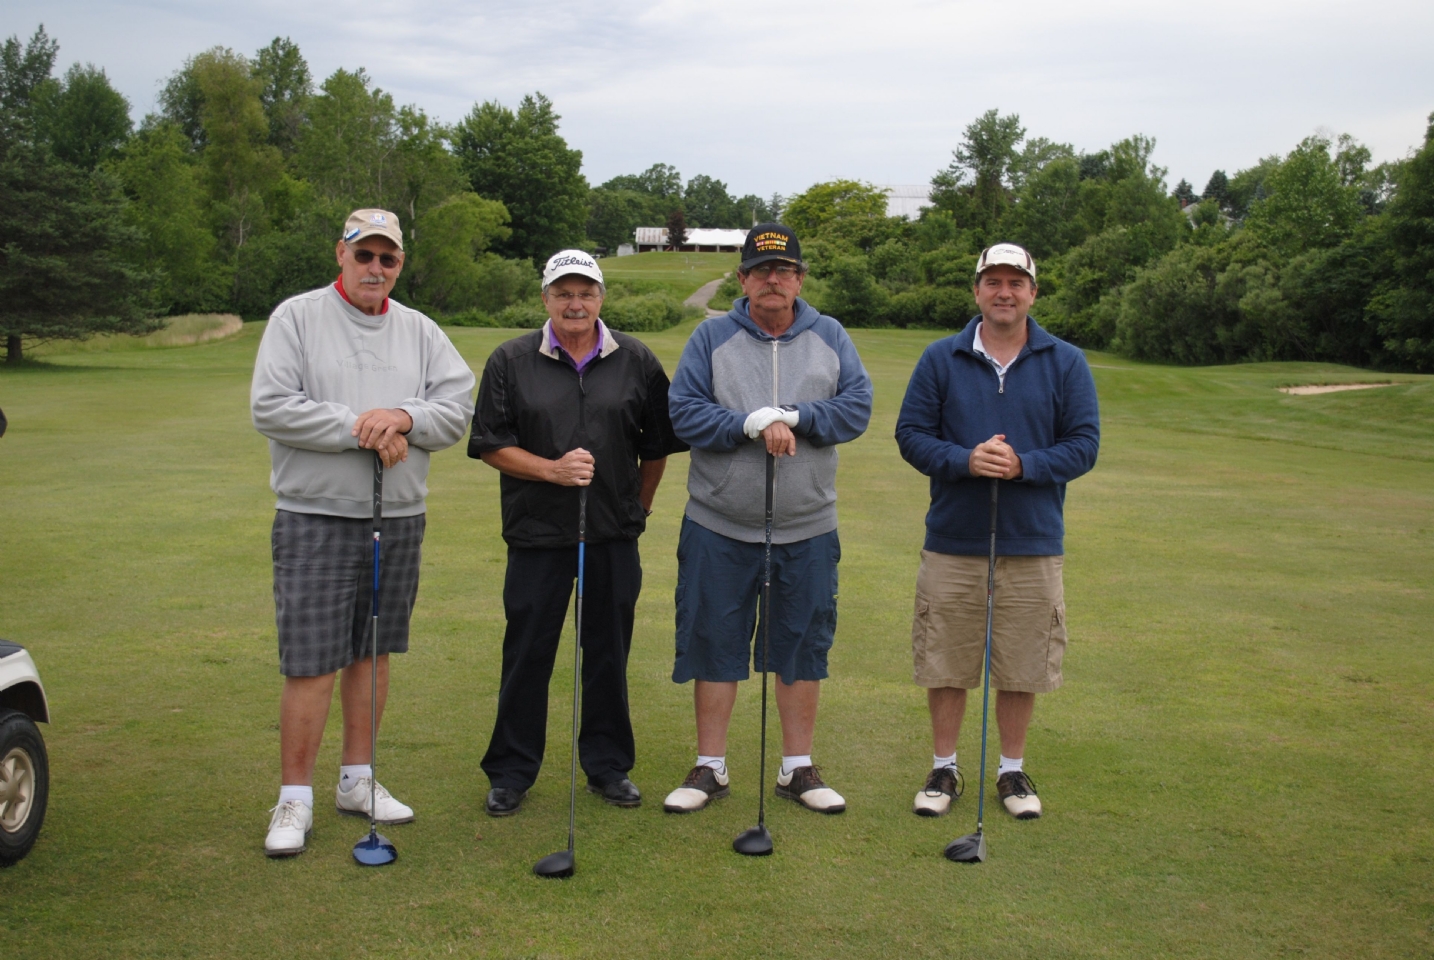 Village Green Golf Course, Newaygo, MI

Jim Ferguson
Gary Vanbuskirk
Dave Bradley
Mike Ferguson
